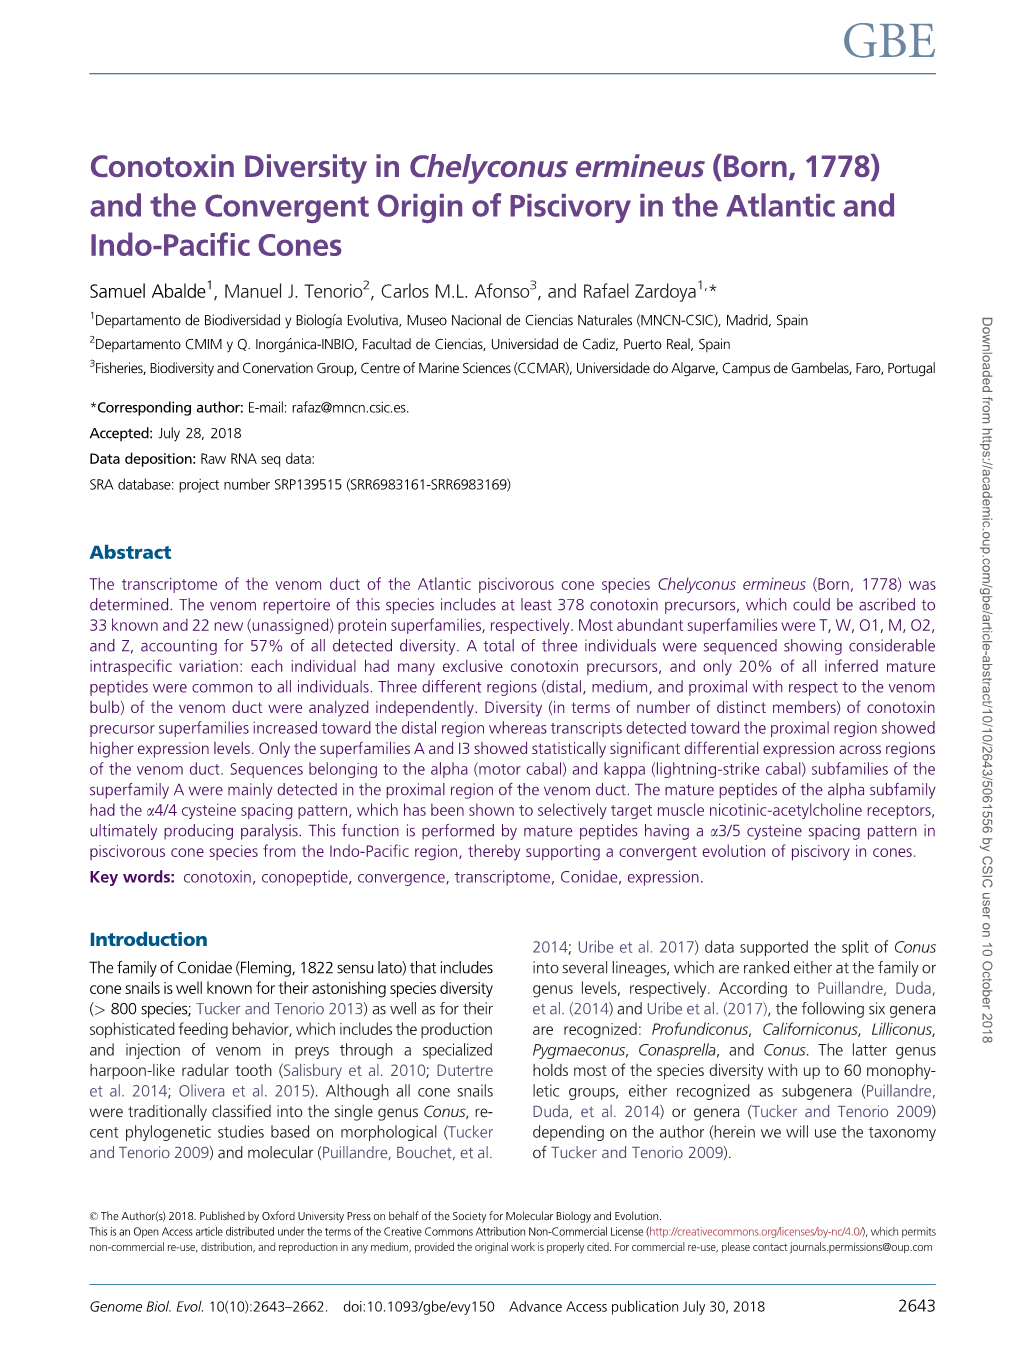 Conotoxin Diversity in Chelyconus Ermineus (Born, 1778) and the Convergent Origin of Piscivory in the Atlantic and Indo-Paciﬁc Cones